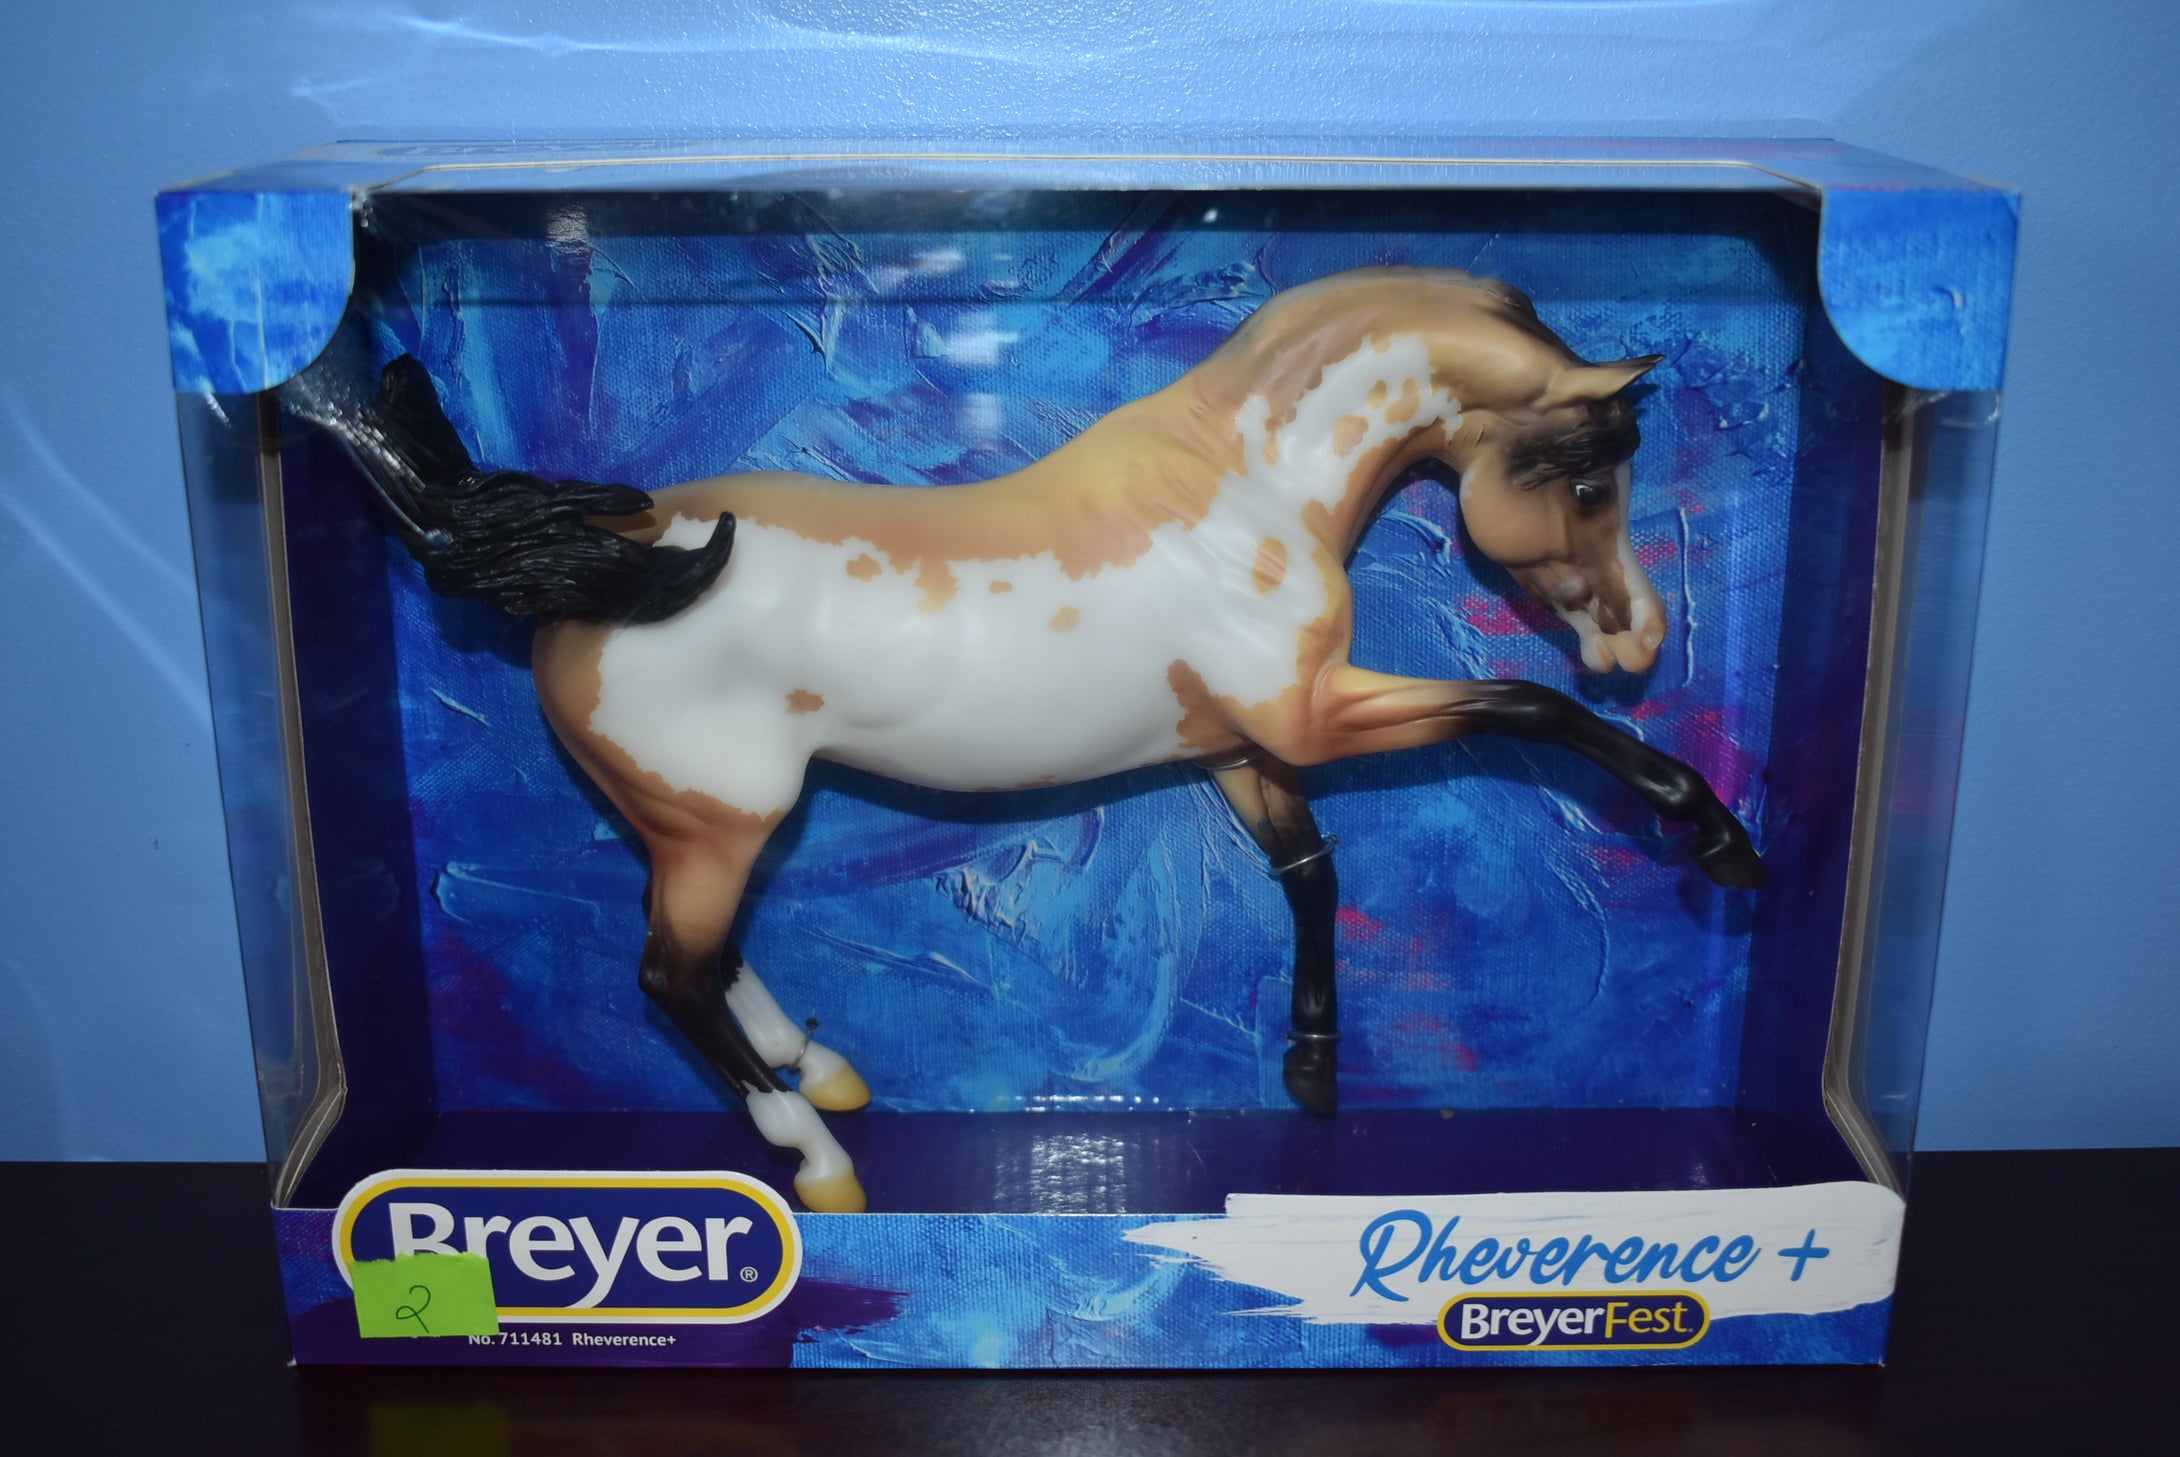 Rheverence+-Damaged Box-Breyerfest 2021 Limited Edition Exclusive-Breyer Traditional